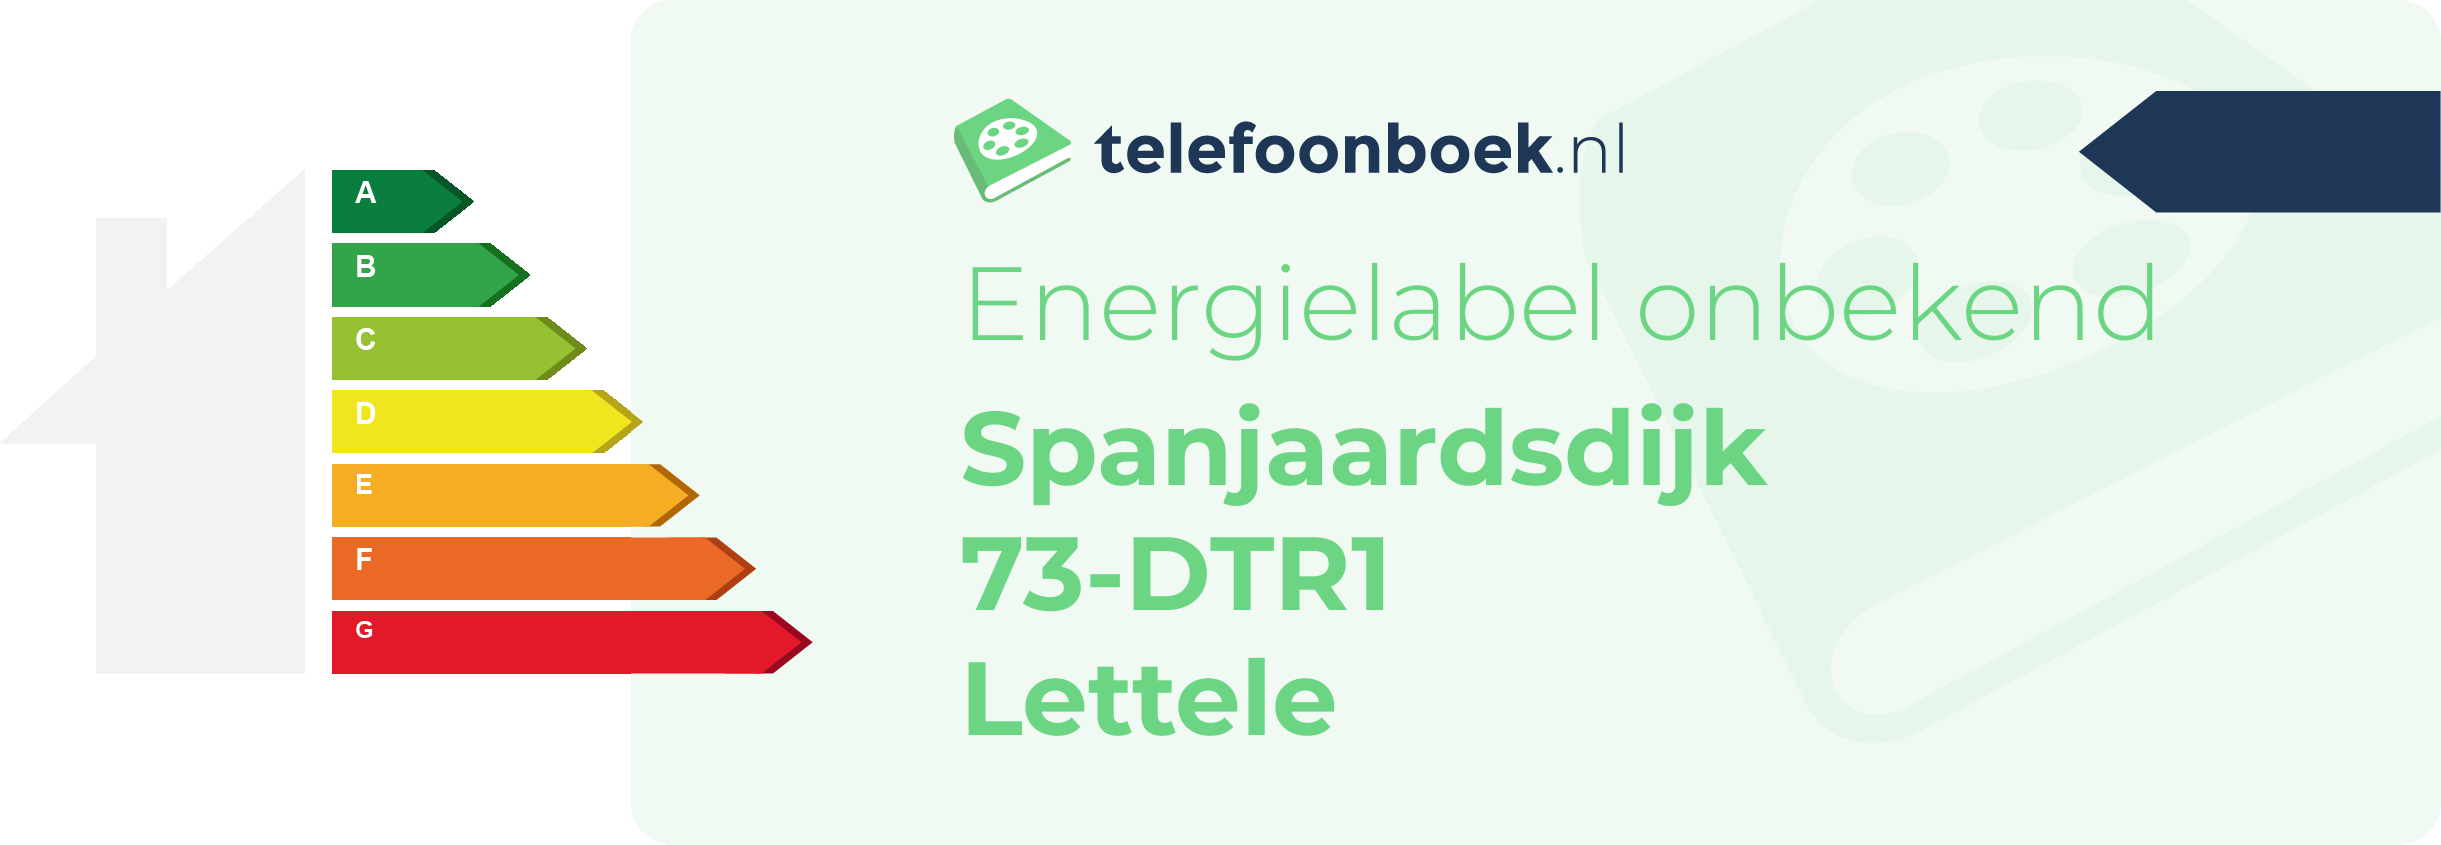 Energielabel Spanjaardsdijk 73-DTR1 Lettele